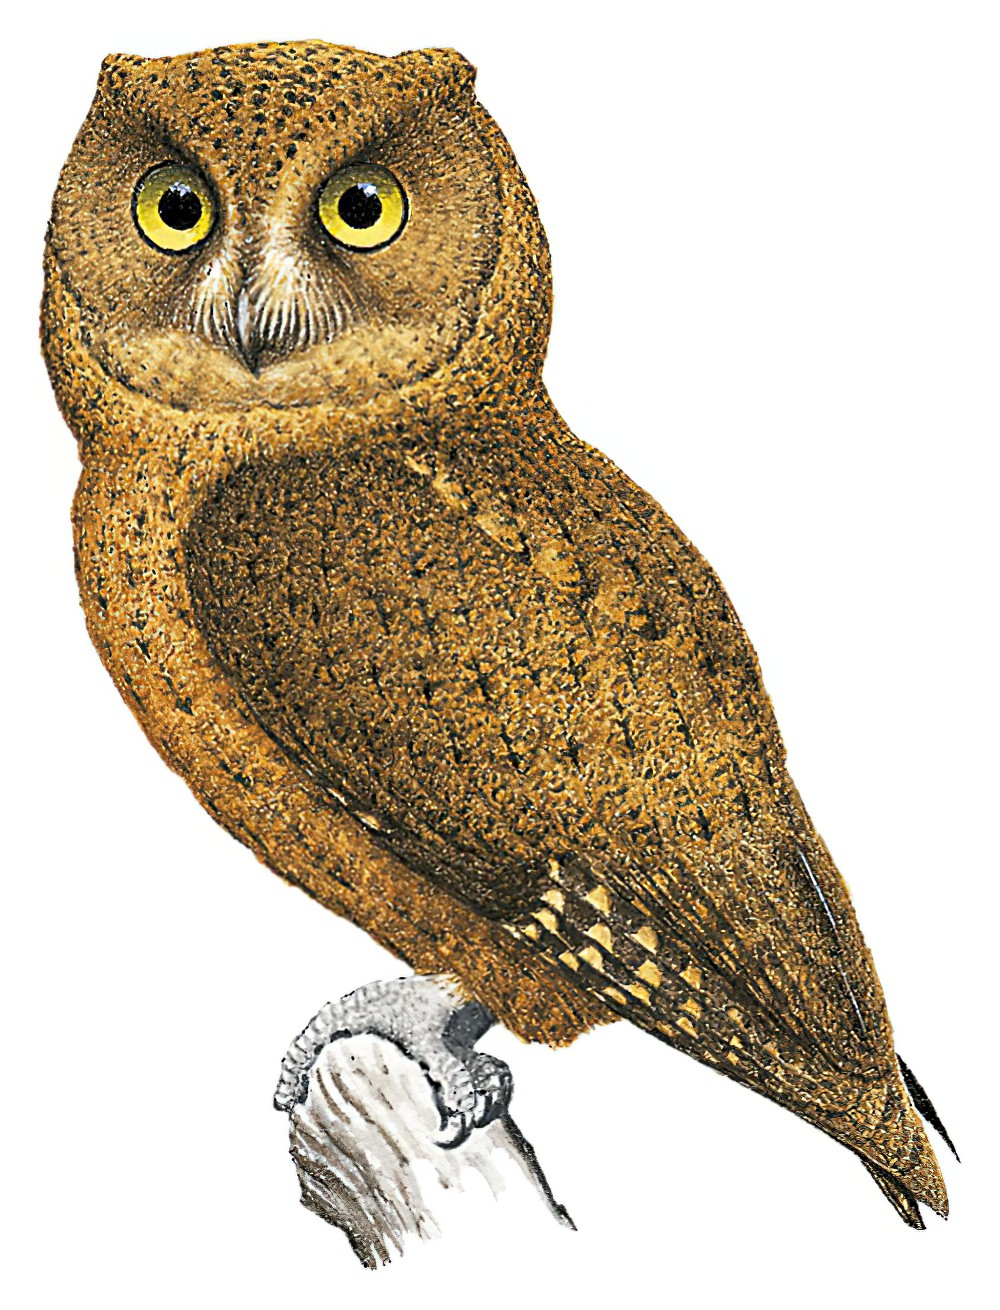 Moheli Scops-Owl / Otus moheliensis